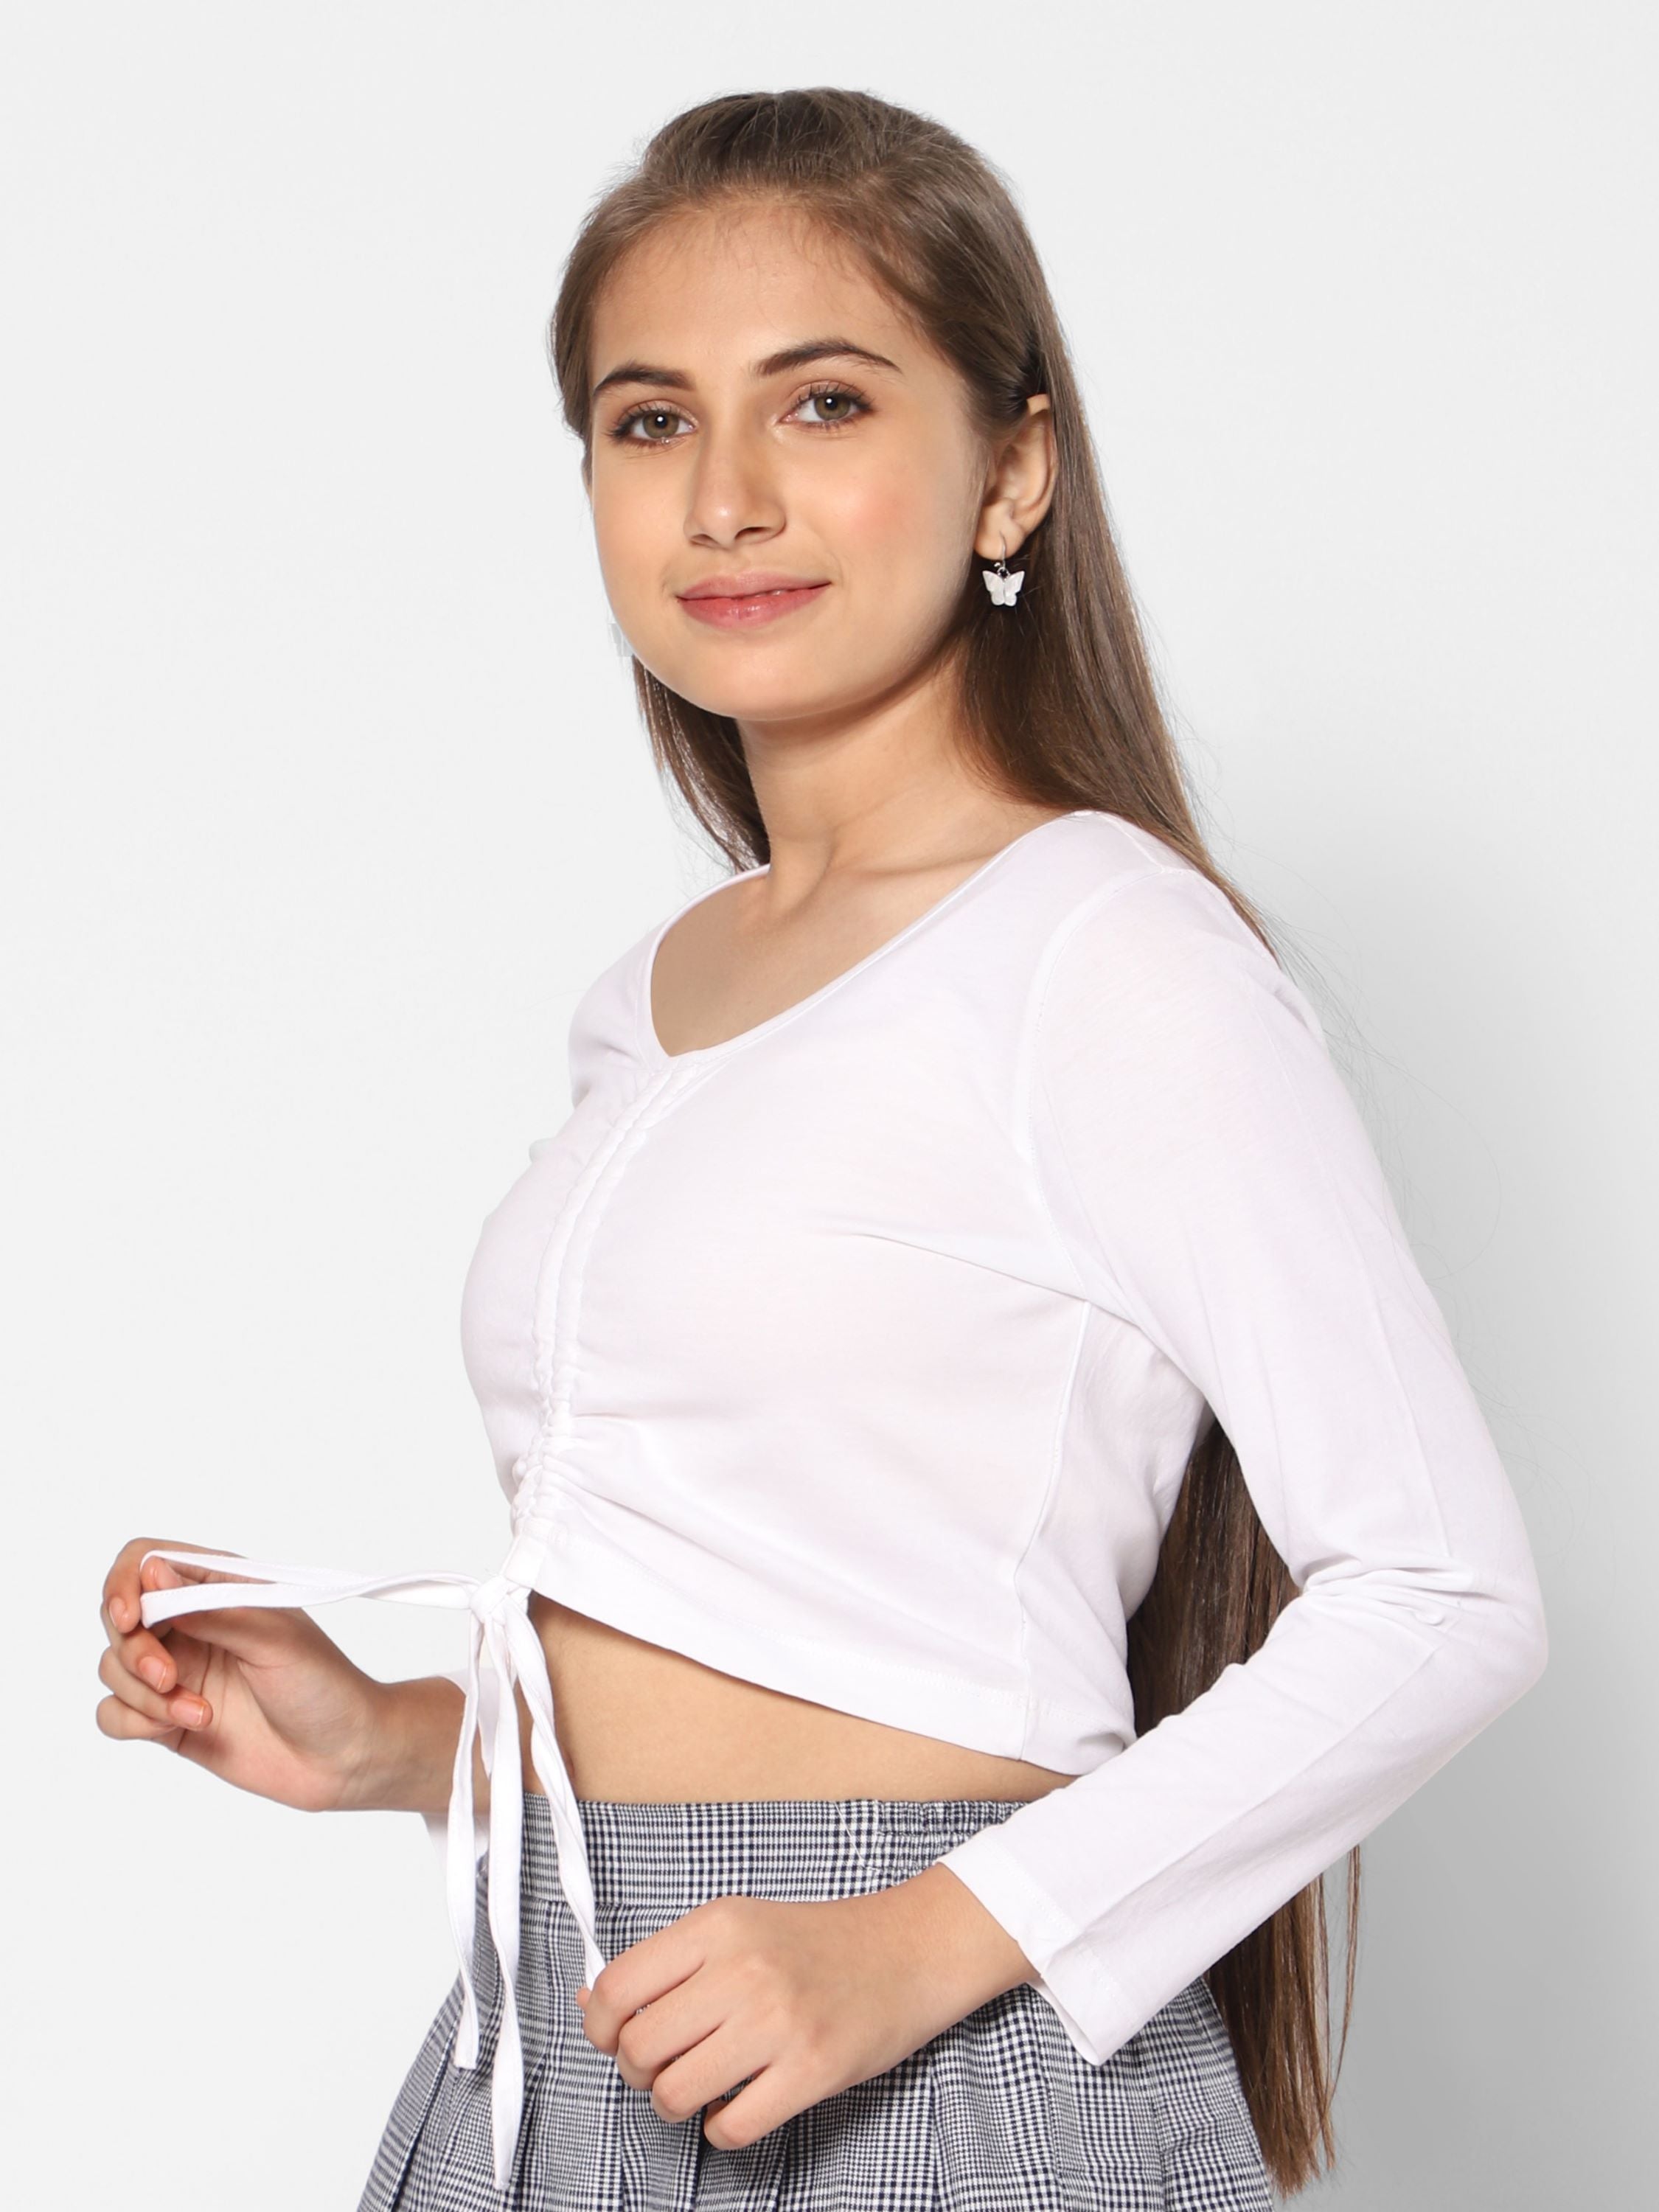 TeenTrums Girls Crop T-shirt Rouching -  White